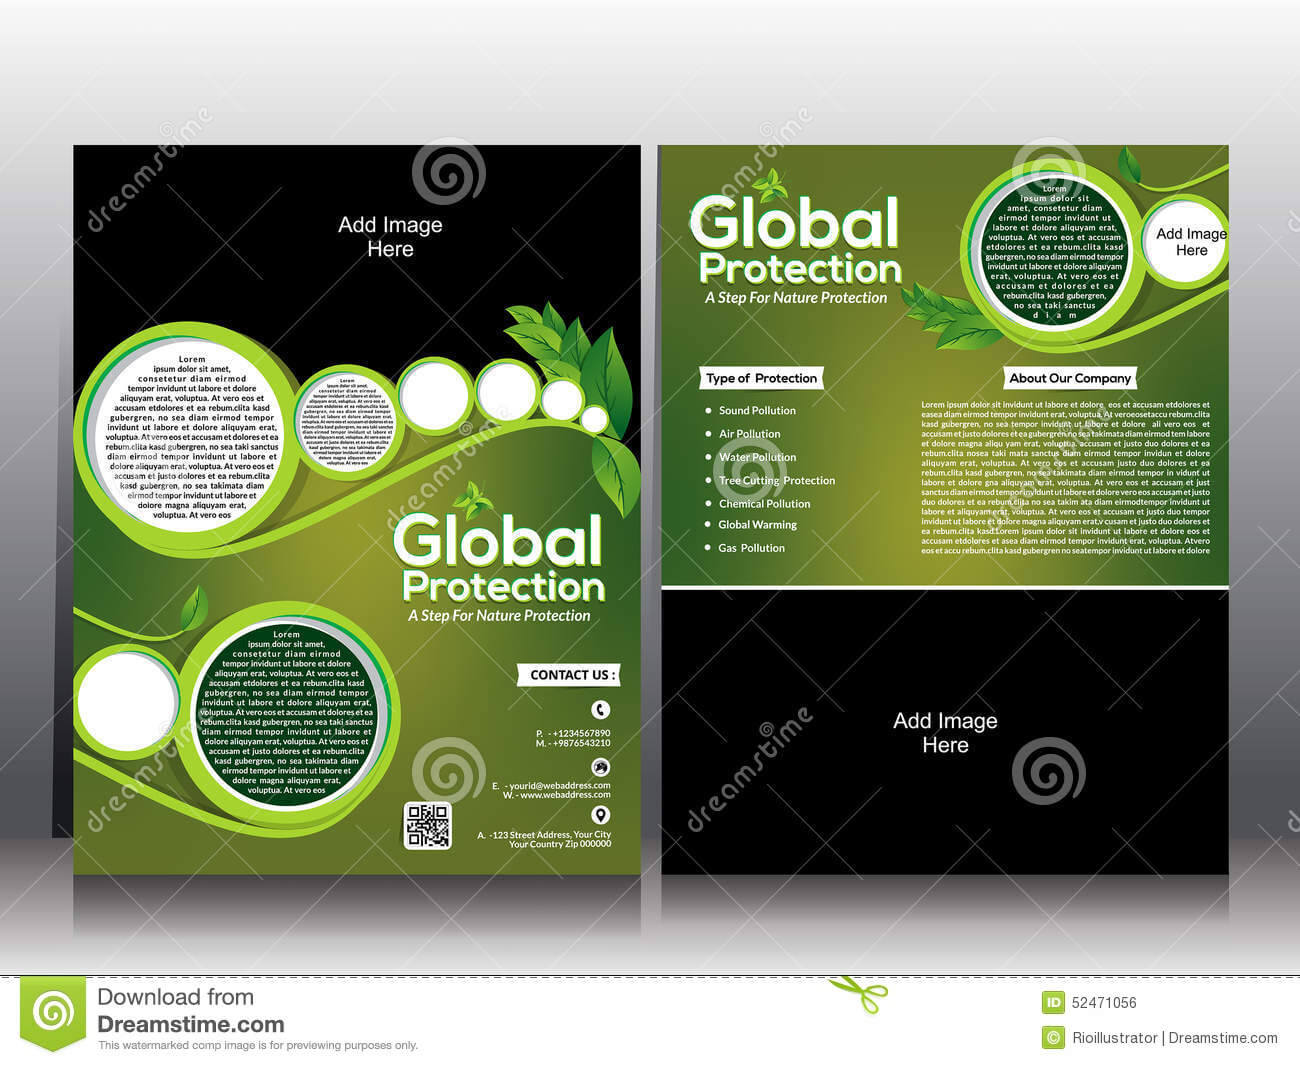 Brochure Template Illustrator Free Download | How To Design With Brochure Template Illustrator Free Download